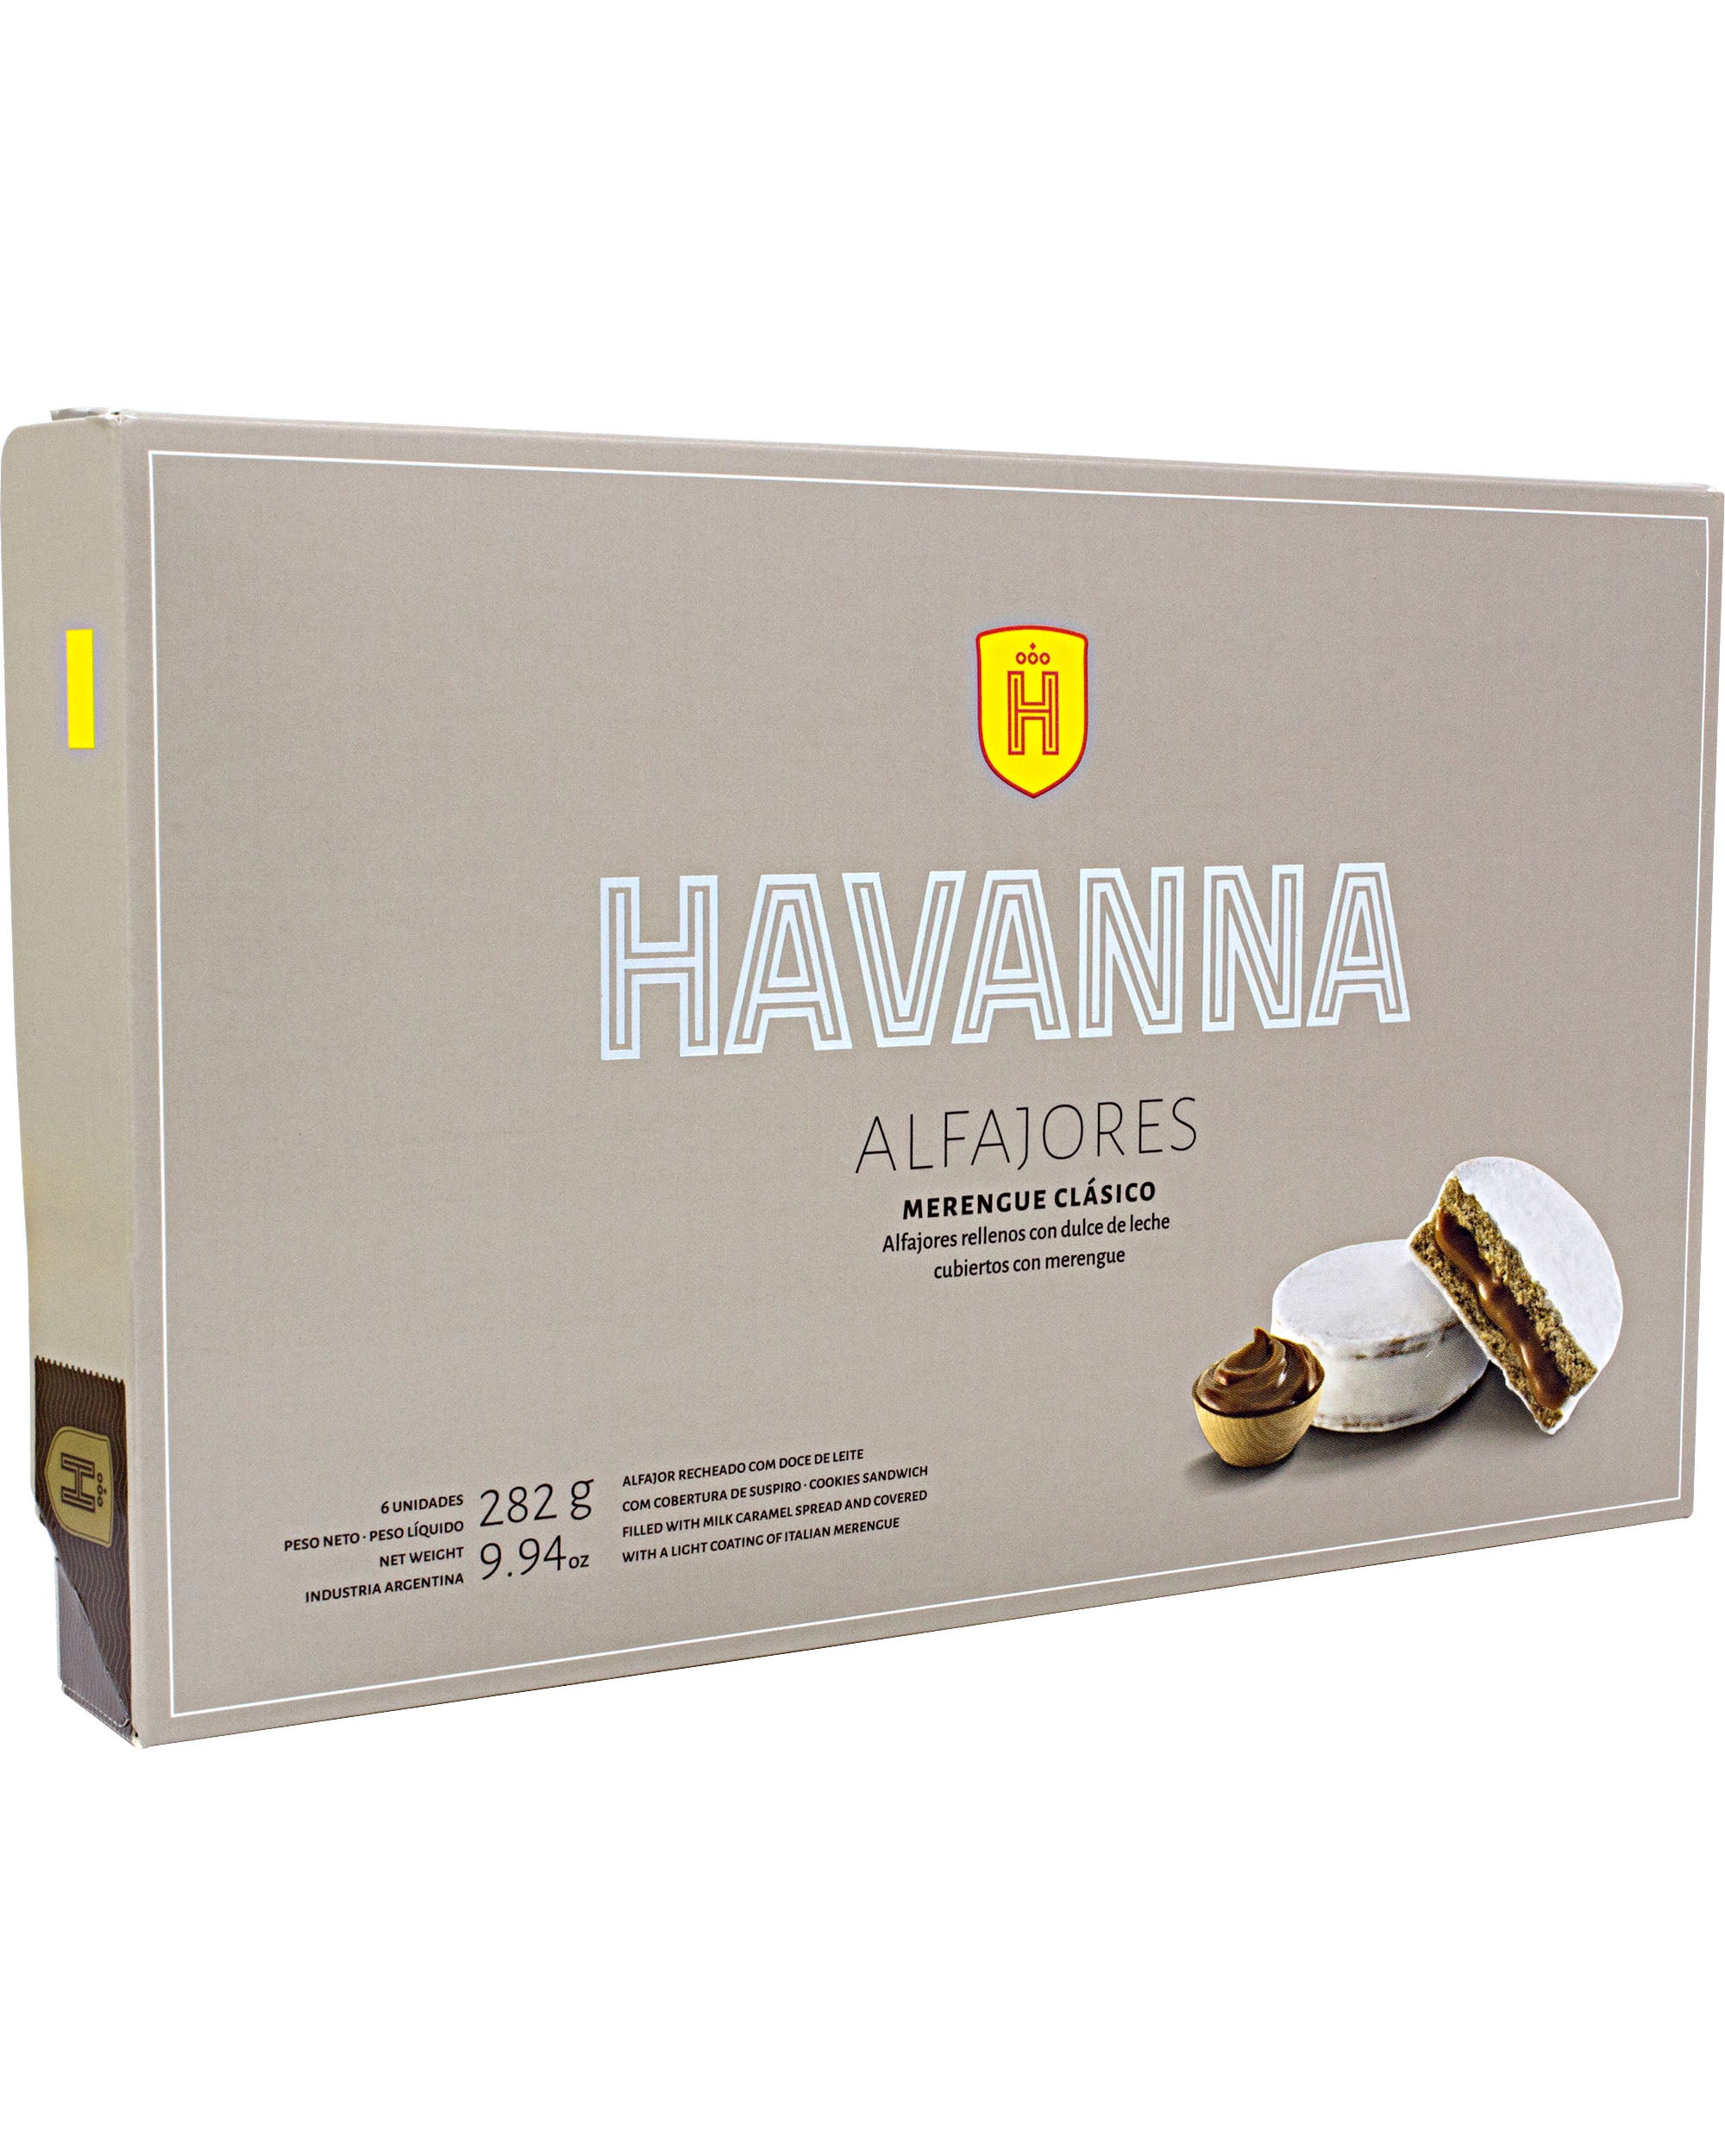 Havanna Alfajores (Classic Meringue) - Box of | A Little Taste